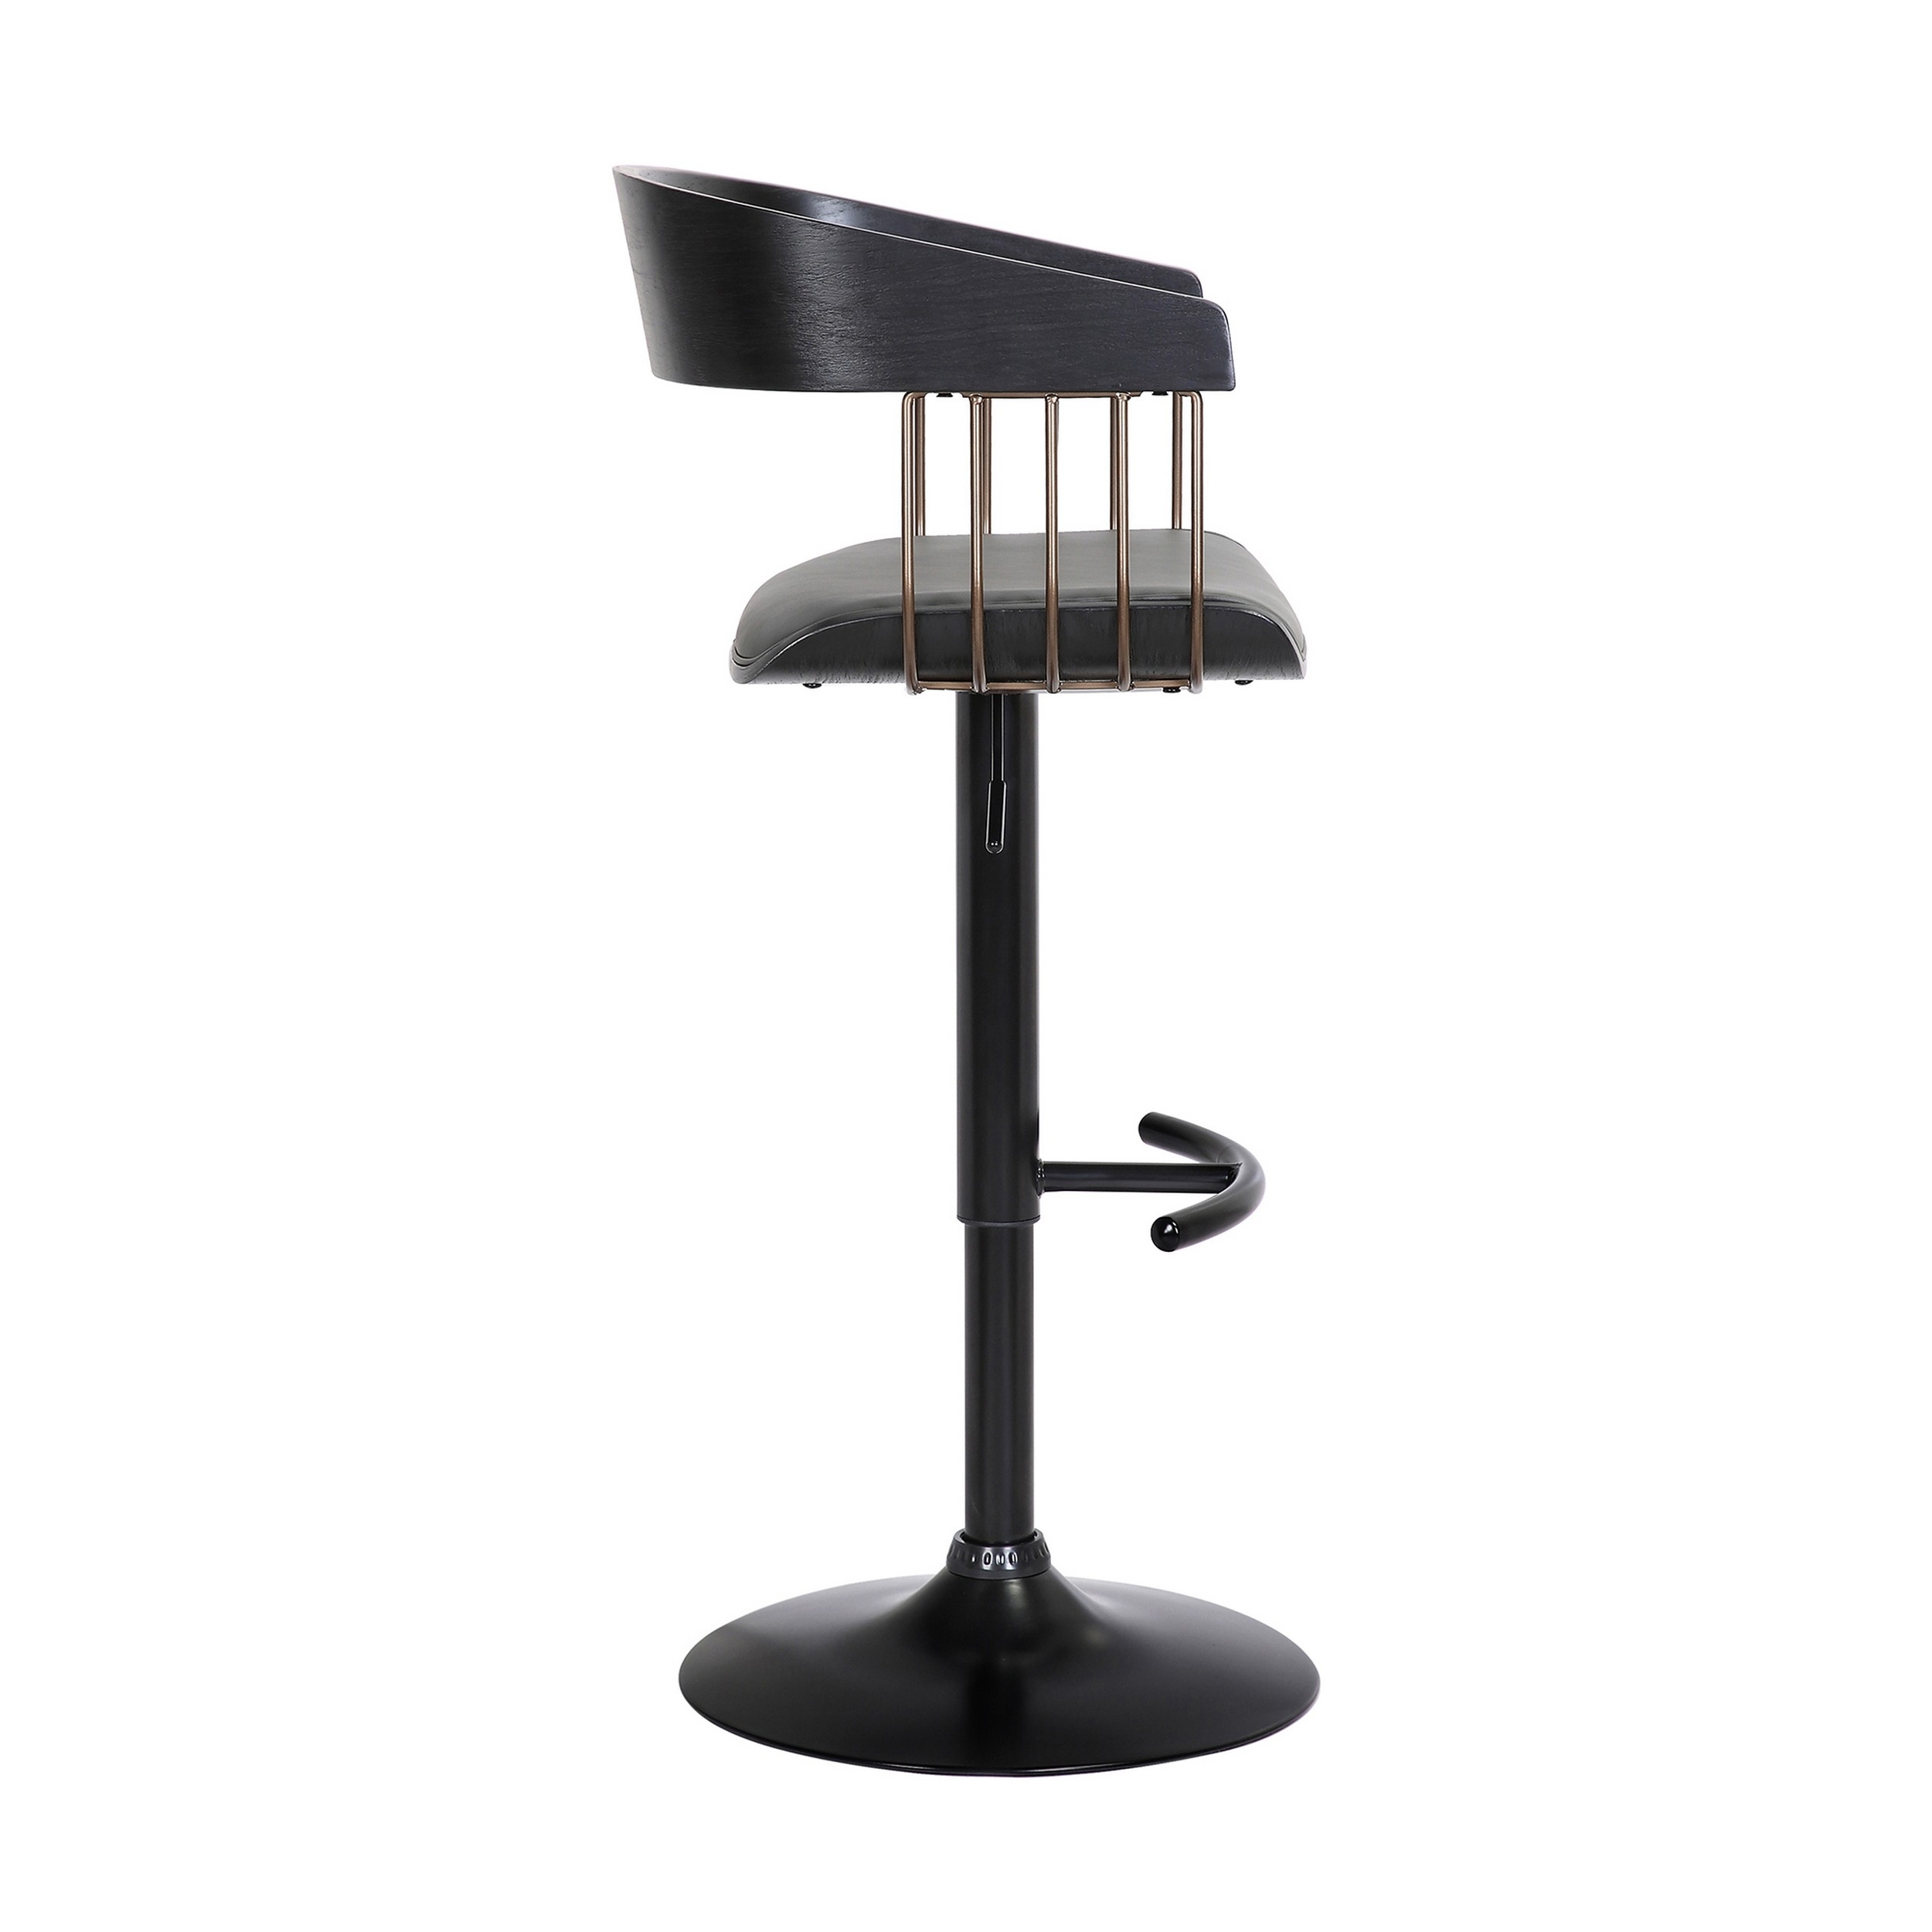 Lizo Barstool Chair, 24-33 Inch Adjustable Height, Curved, Black, Gray - Saltoro Sherpi